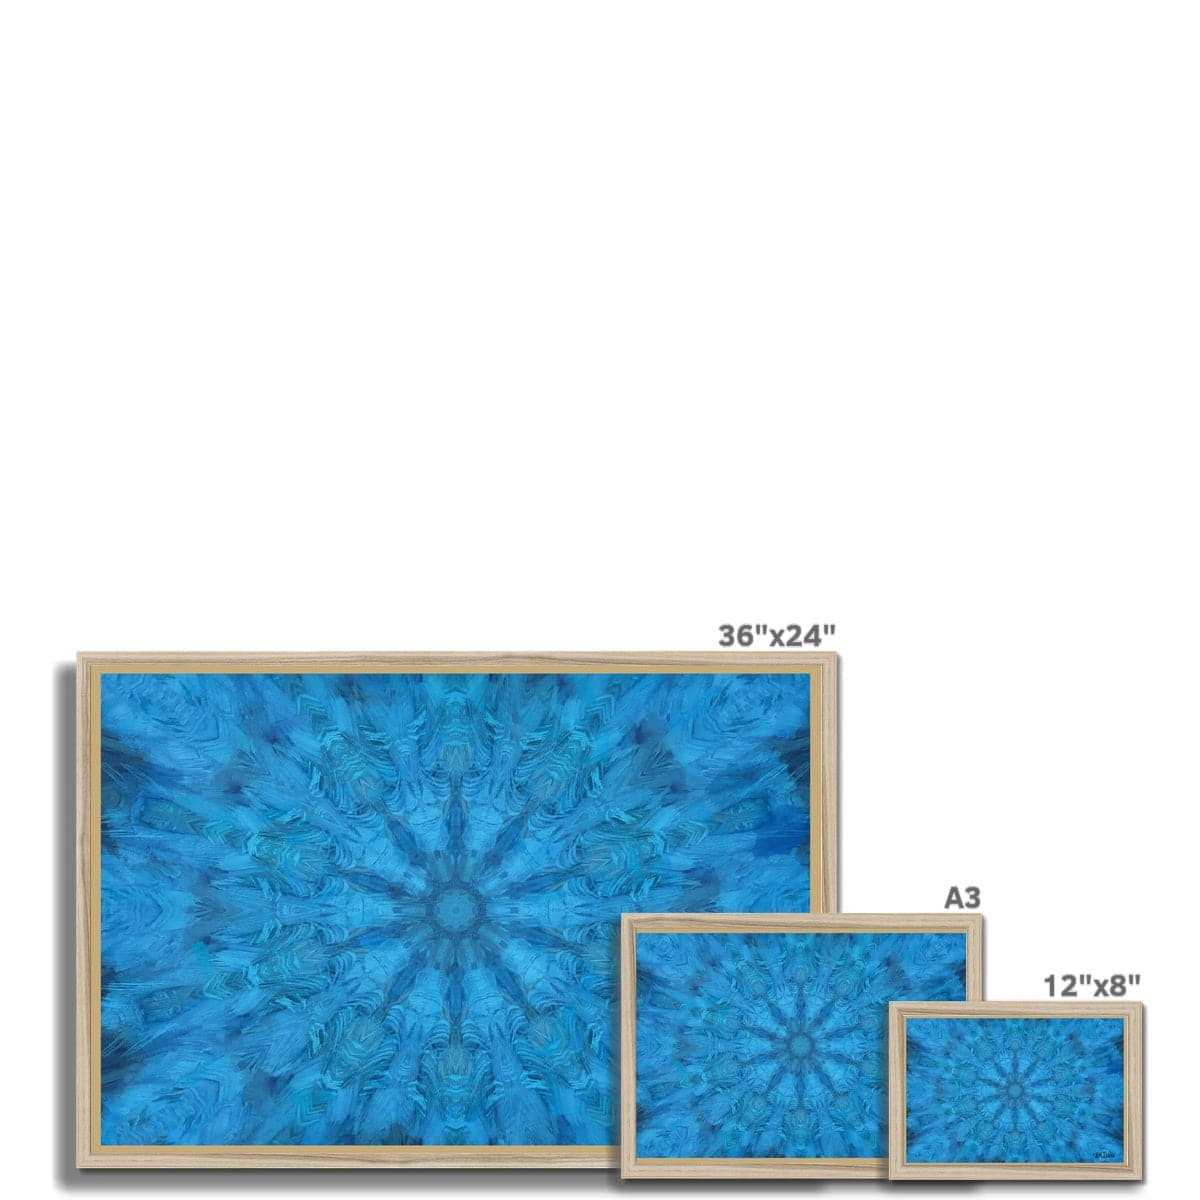 Blue Pattern Framed Print